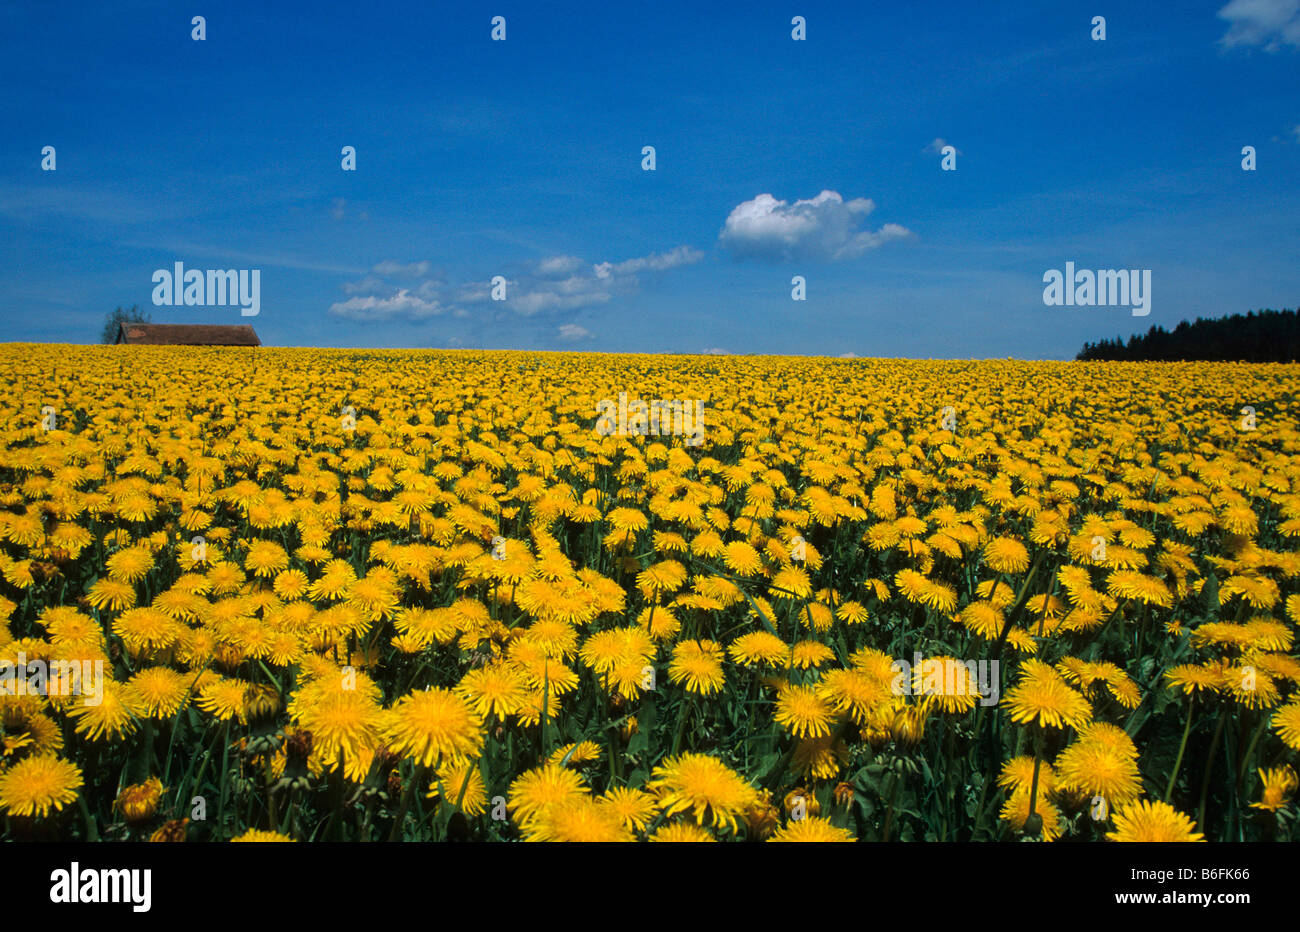 Dandelion (Taraxacum officinale) field in the Allgaeu region of Germany Stock Photo